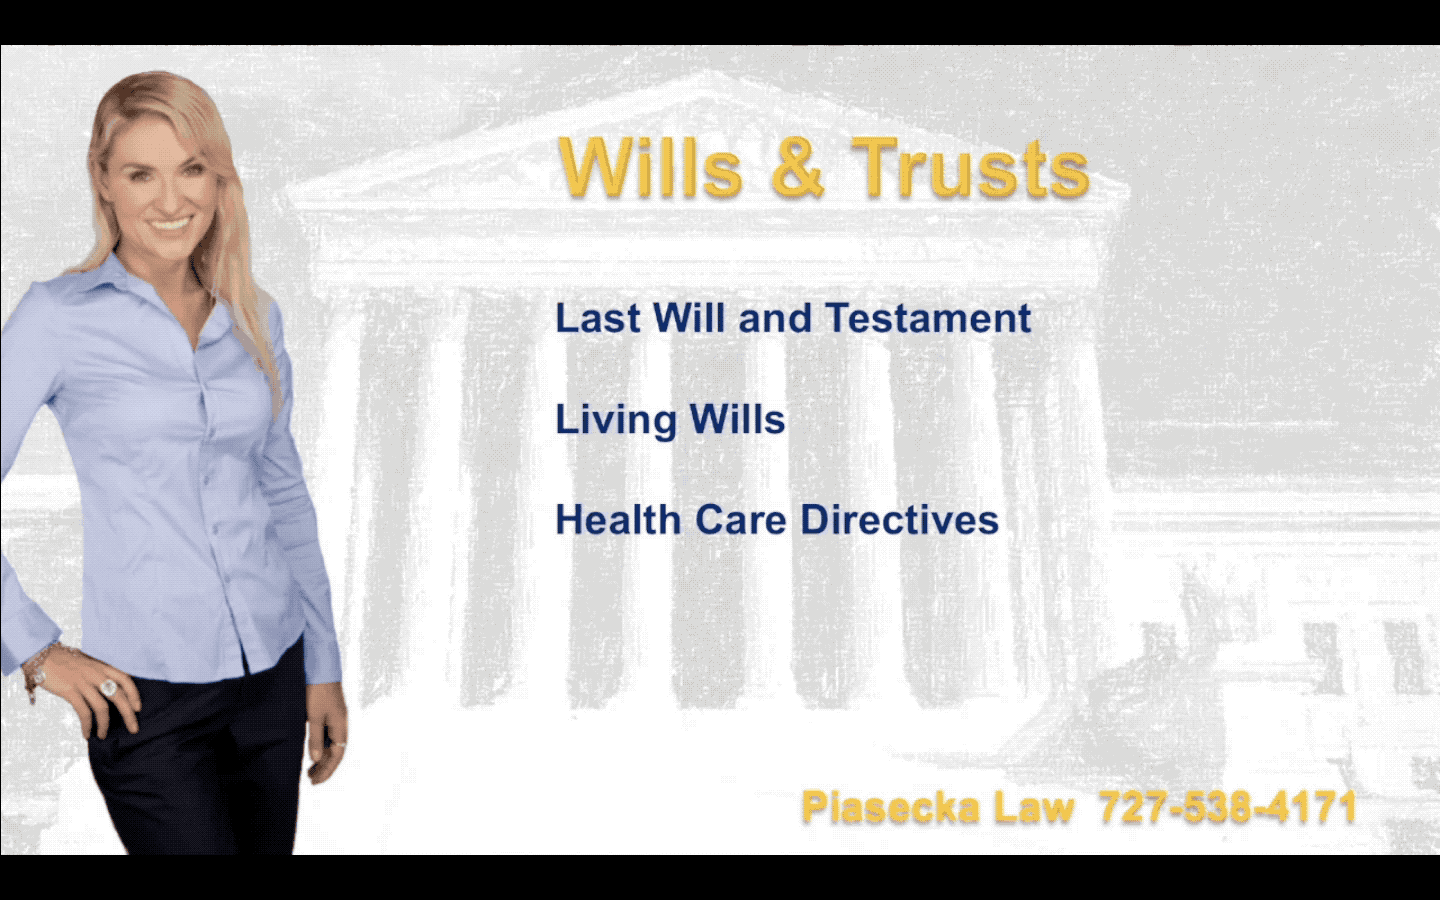 Piasecka Law 727-538-4171 Wills & Trusts